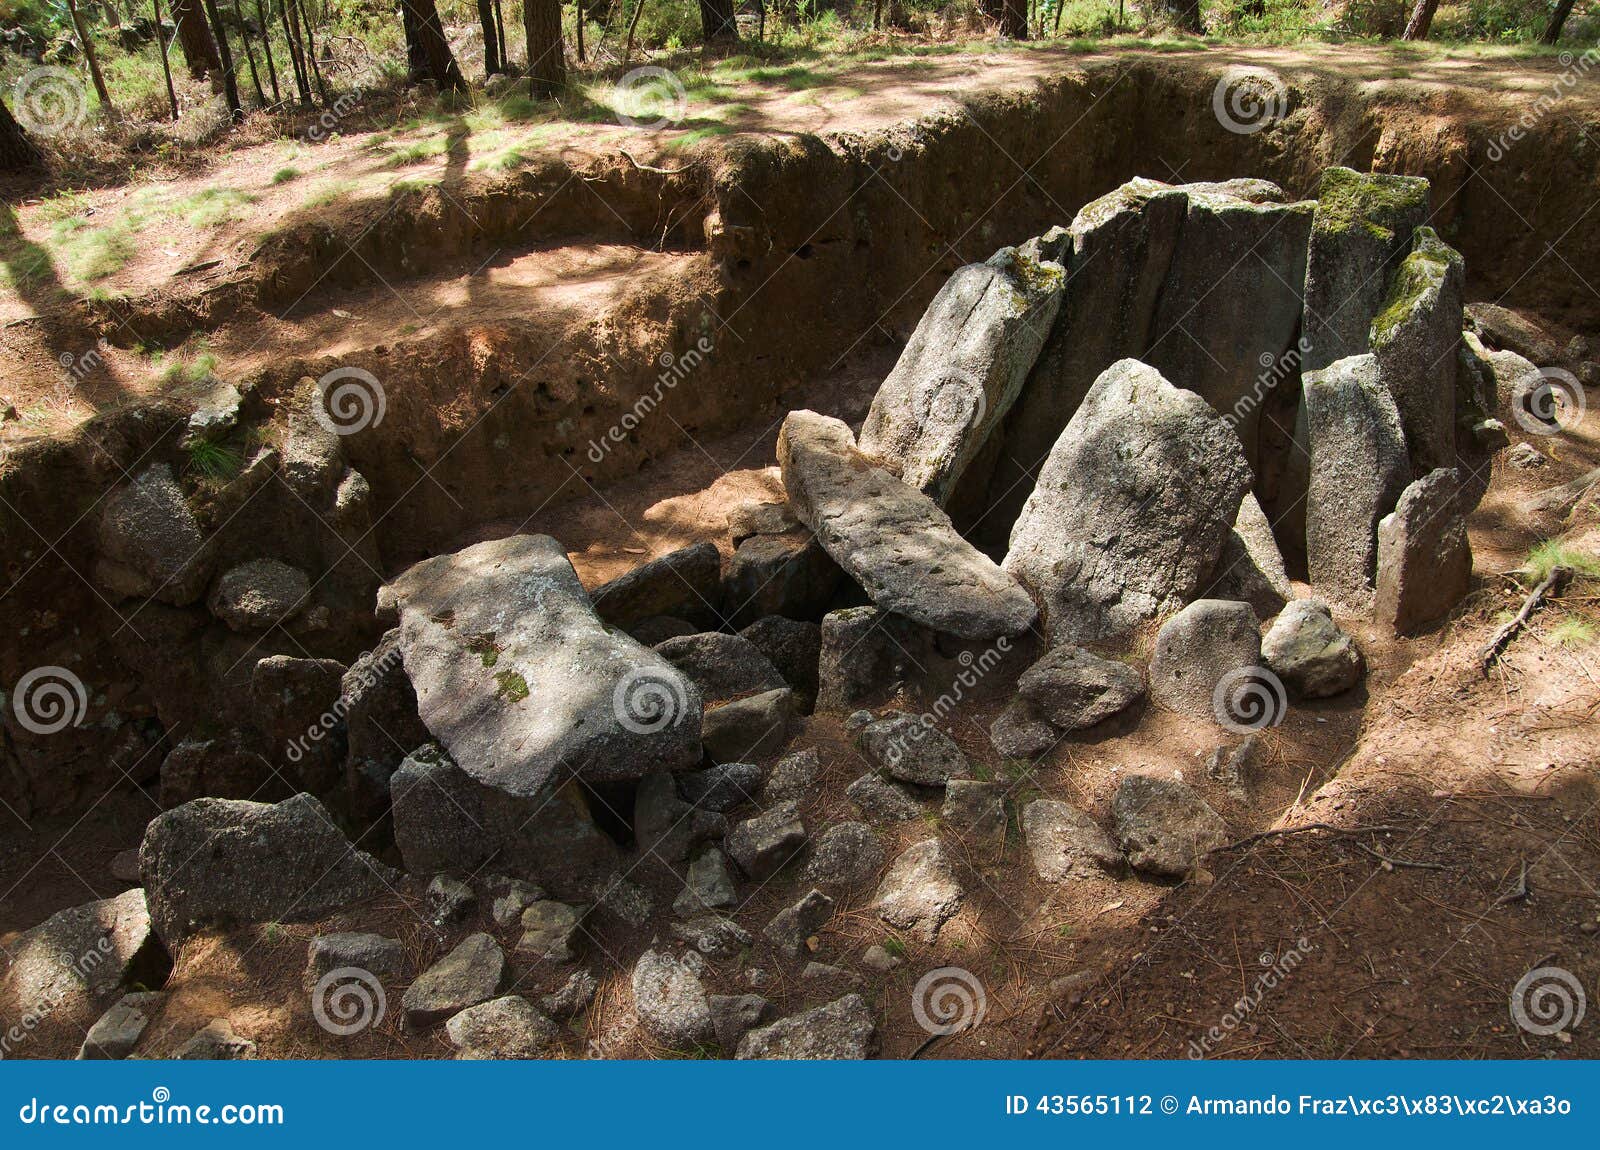 dolmen do rapido lateral perspective. esposende, portugal